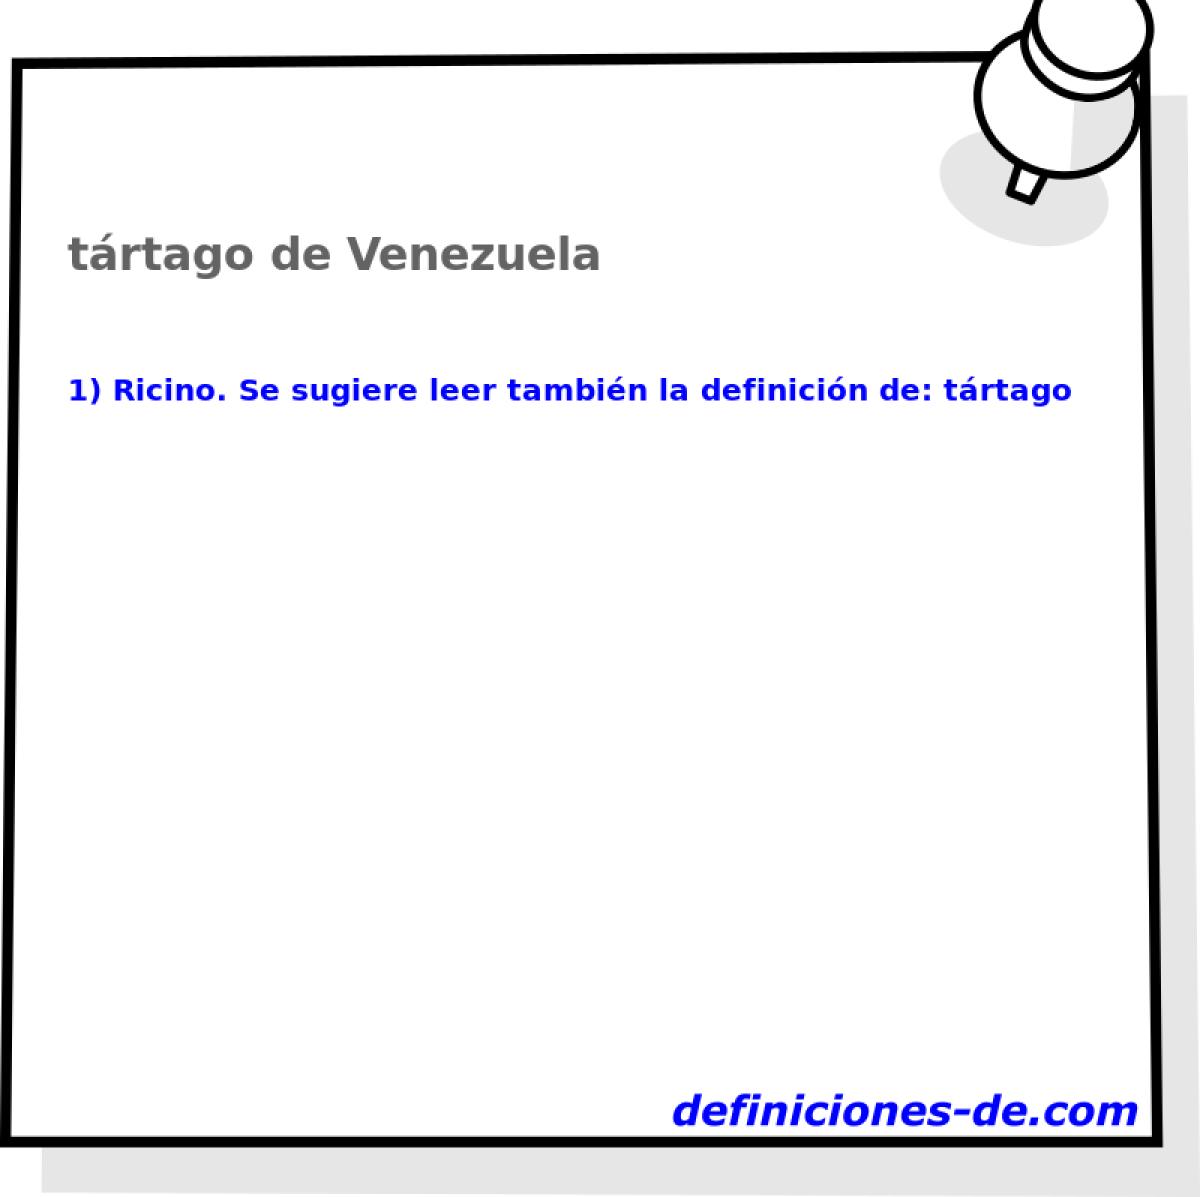 trtago de Venezuela 